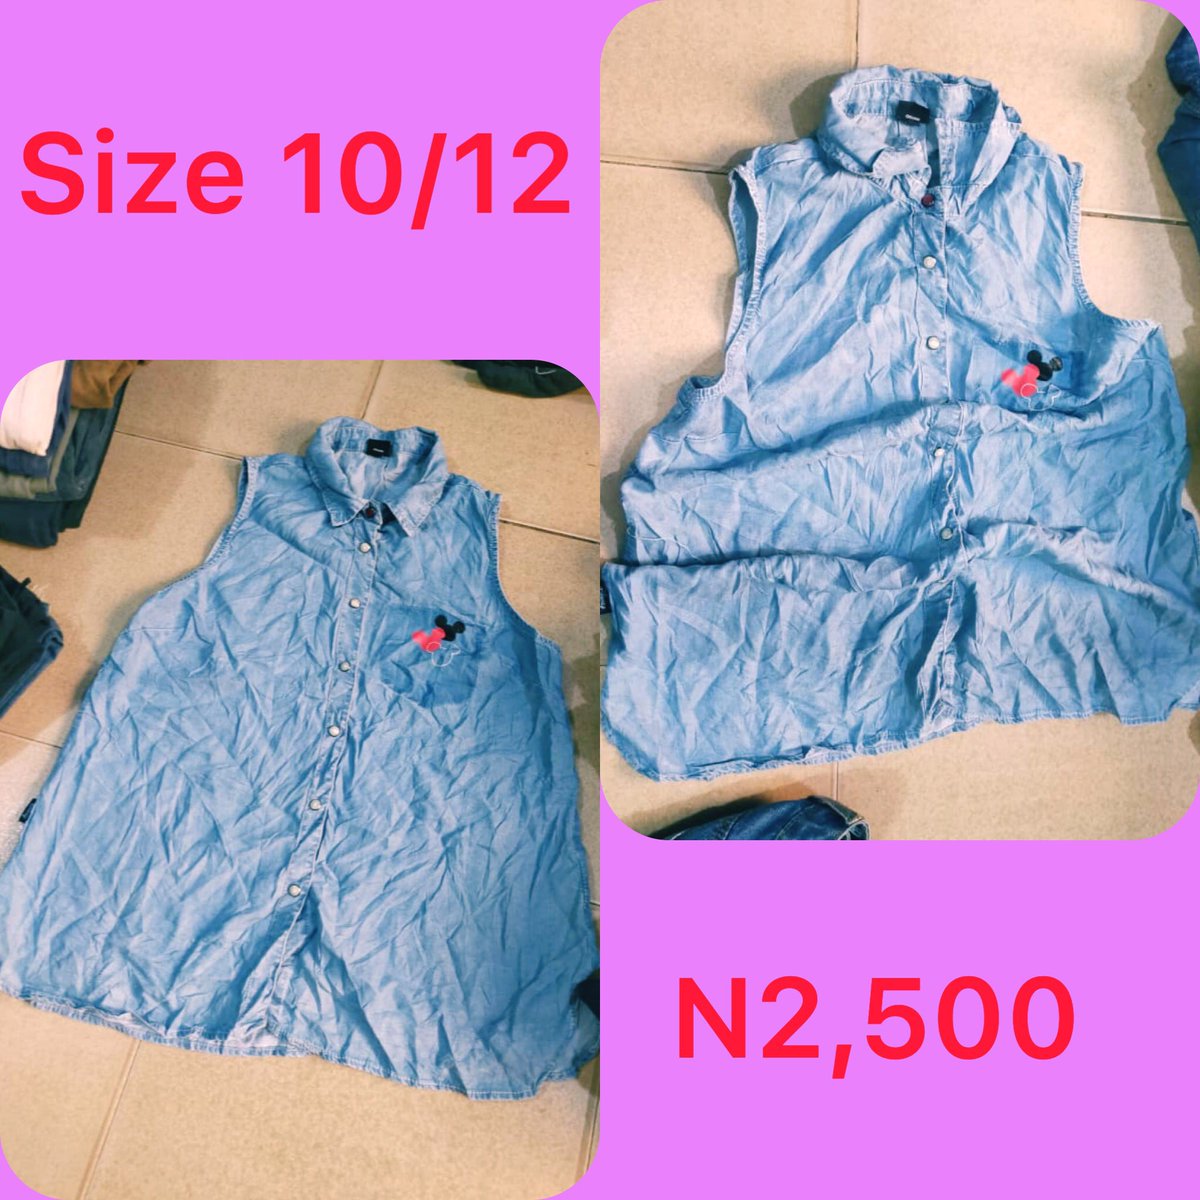 Slide 1: denim hoody       Size 12, N3,000Slide 2: jean jacket       Size 12/14, Price: N3,000Slide 3: denim sleeveless button down shirt       Size 10/12, Price: N2,500Slide 4: open back (with button) top        Size 12/14, Price N2,500